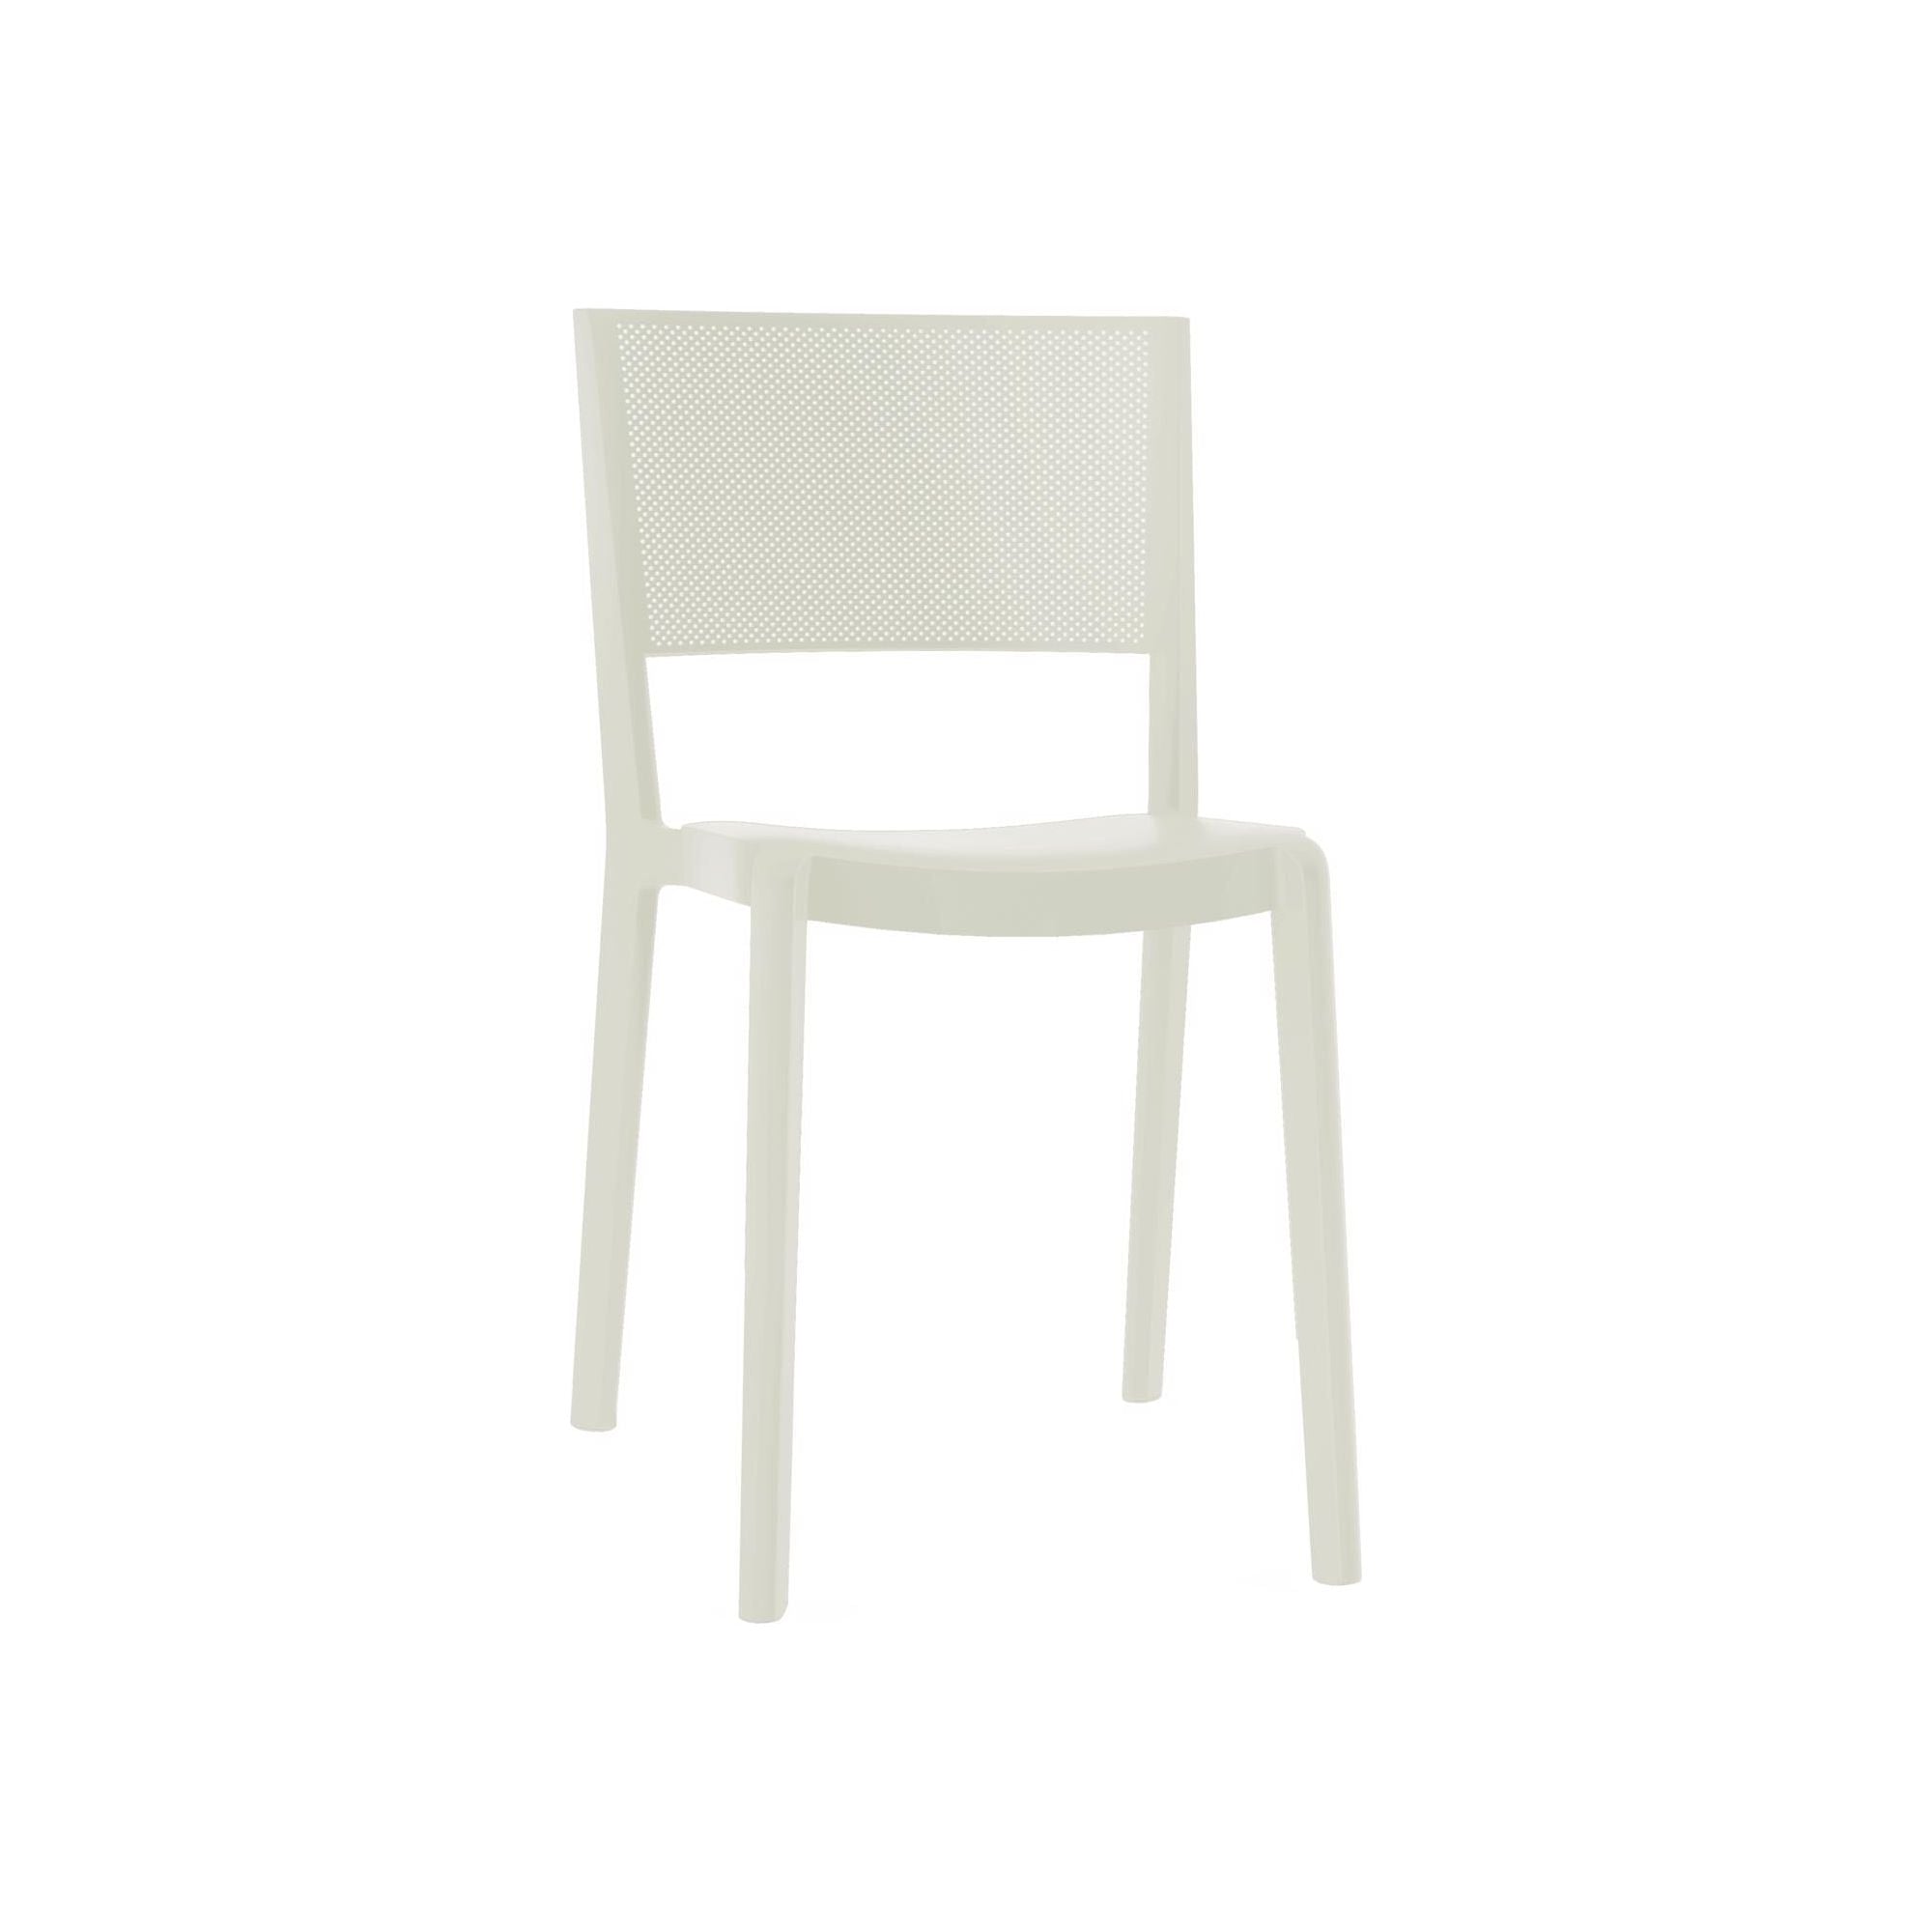 Resol spot chair inside, white outside